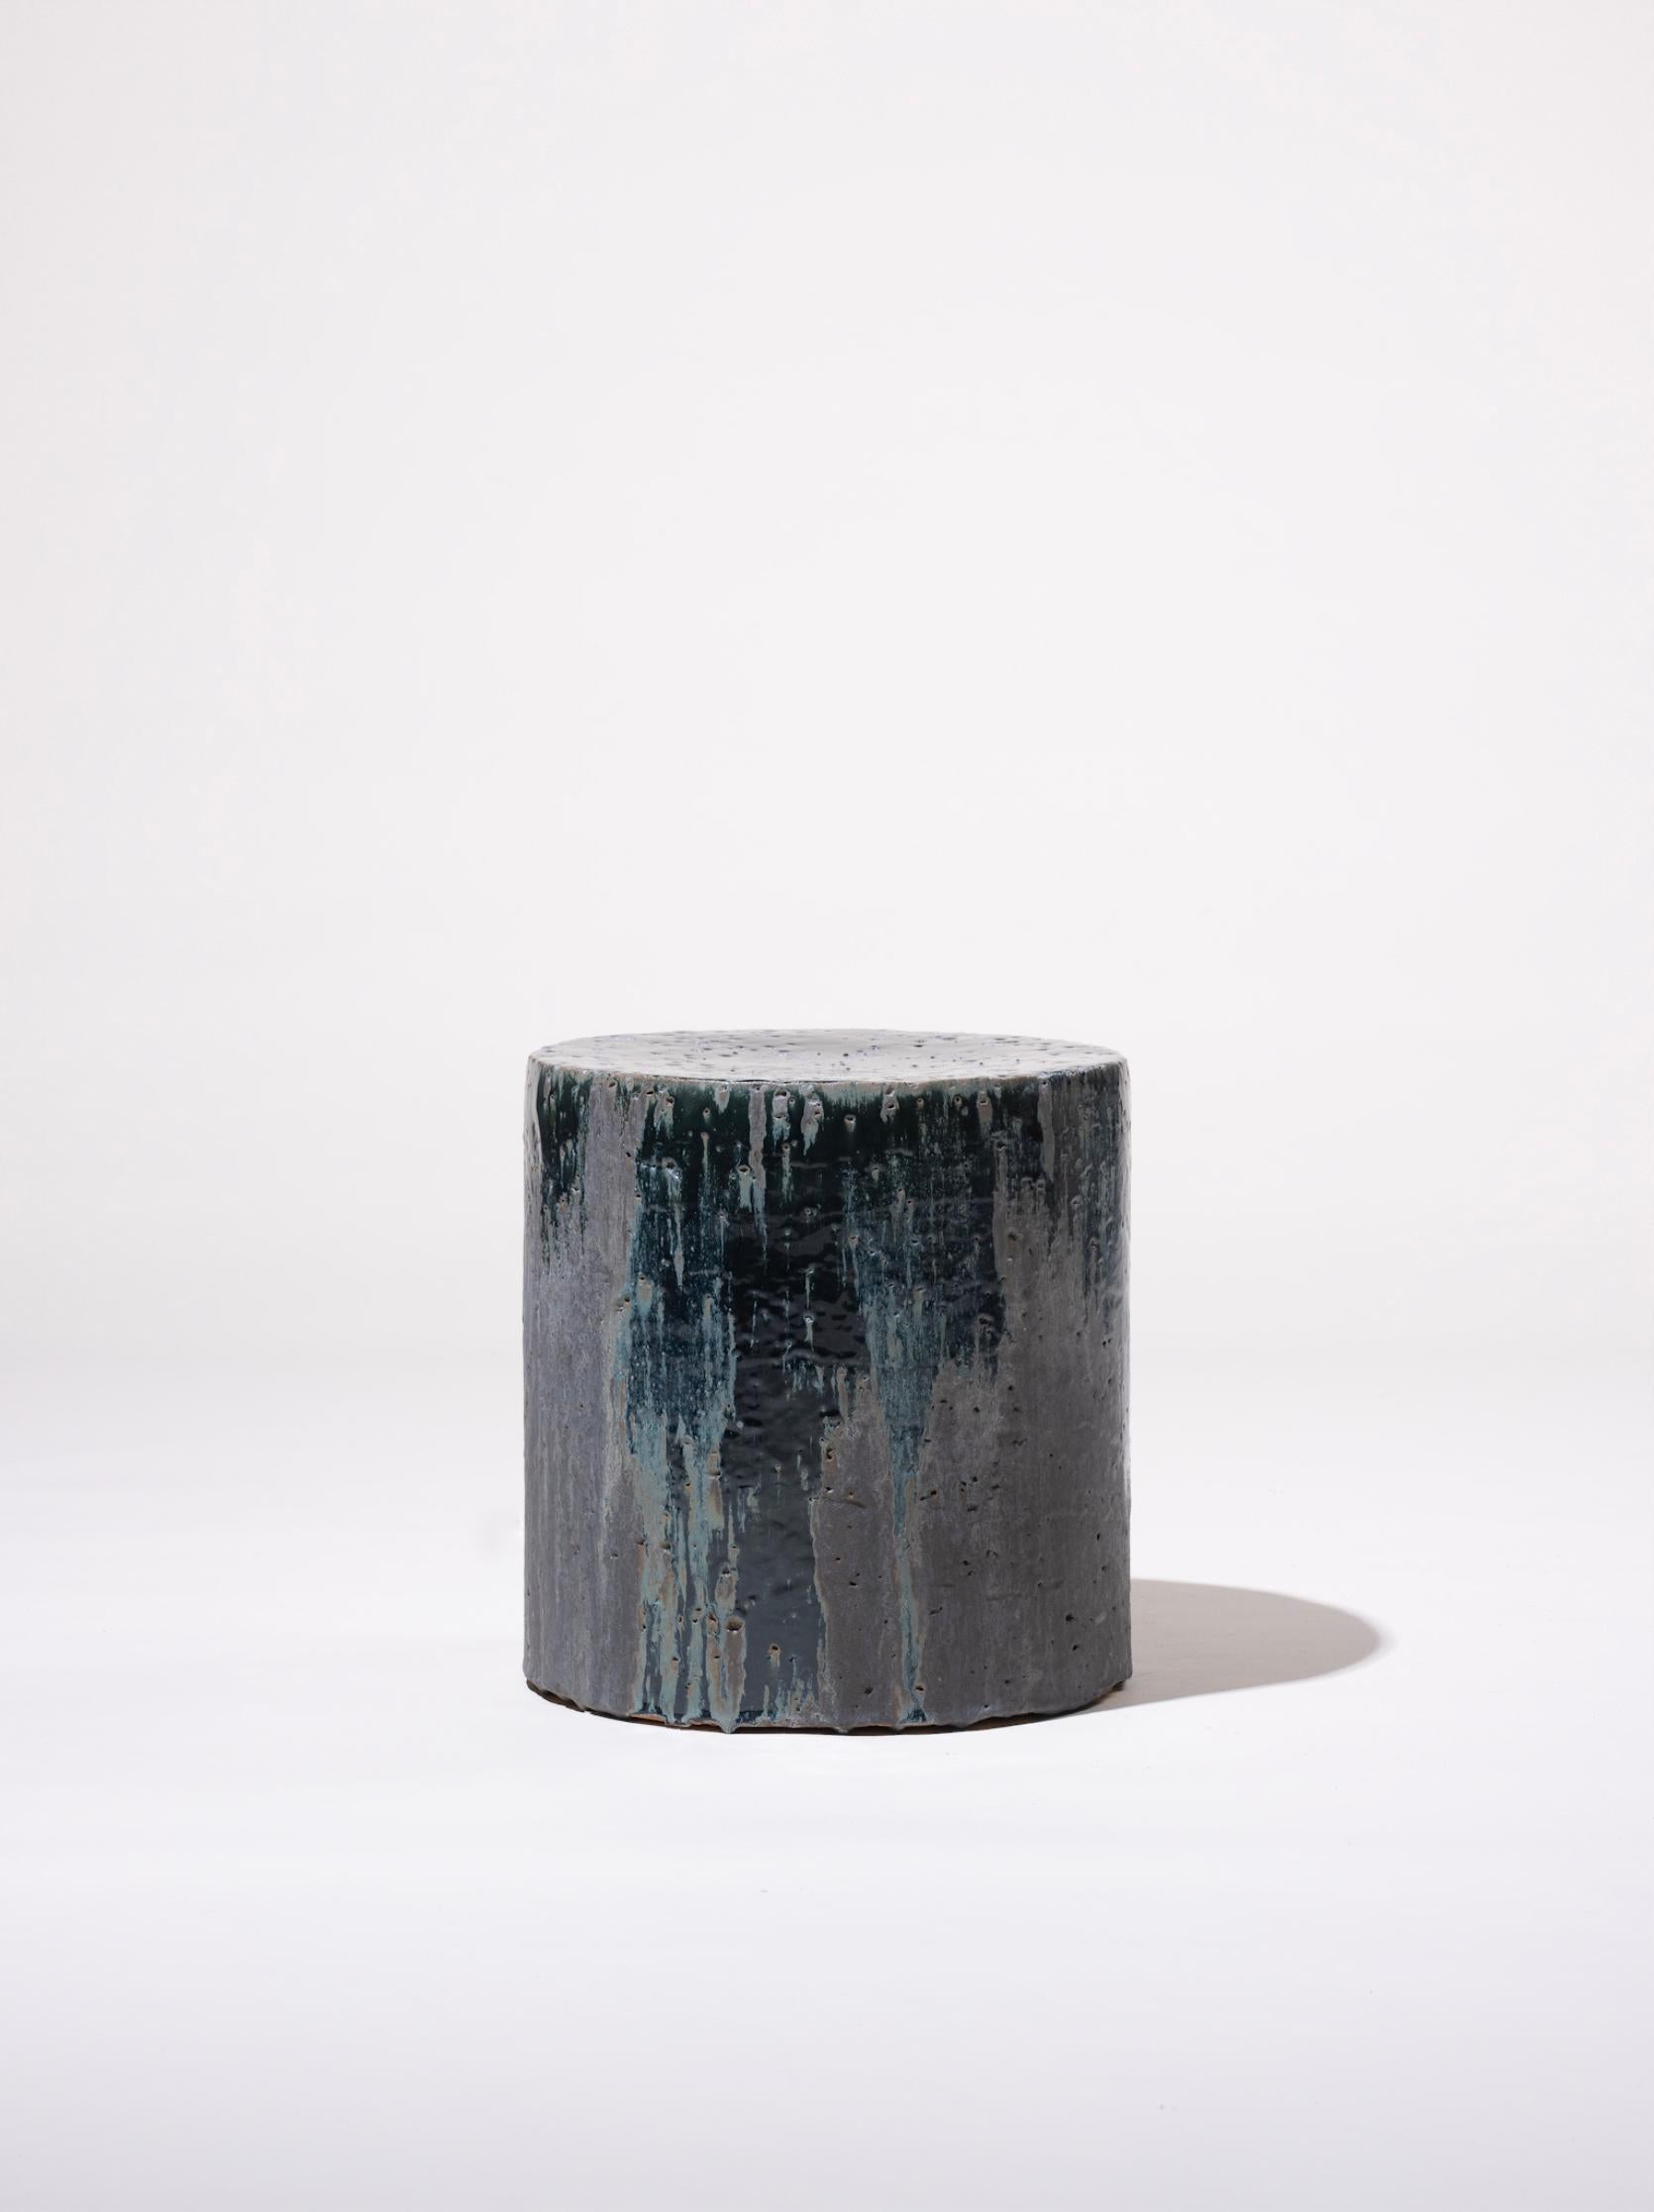 Spanish Contemporary Ceramic Side Table Stool Glazed Stoneware Dark Gray Green Vulcano